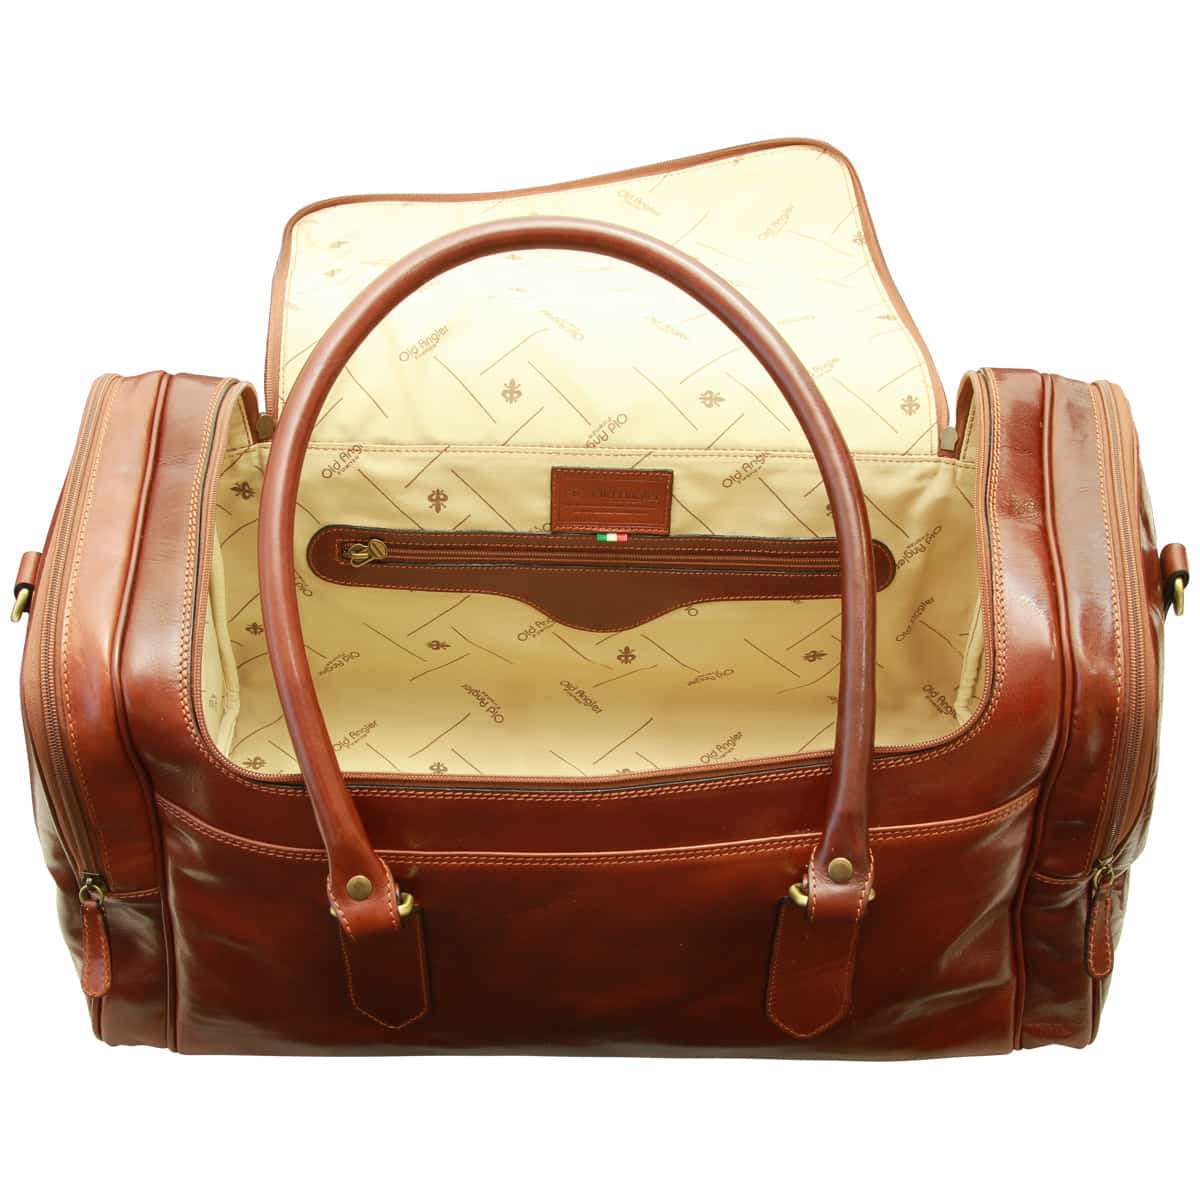 Arno Leather Travel Bag - Brown | 077805MA UK | Old Angler Firenze